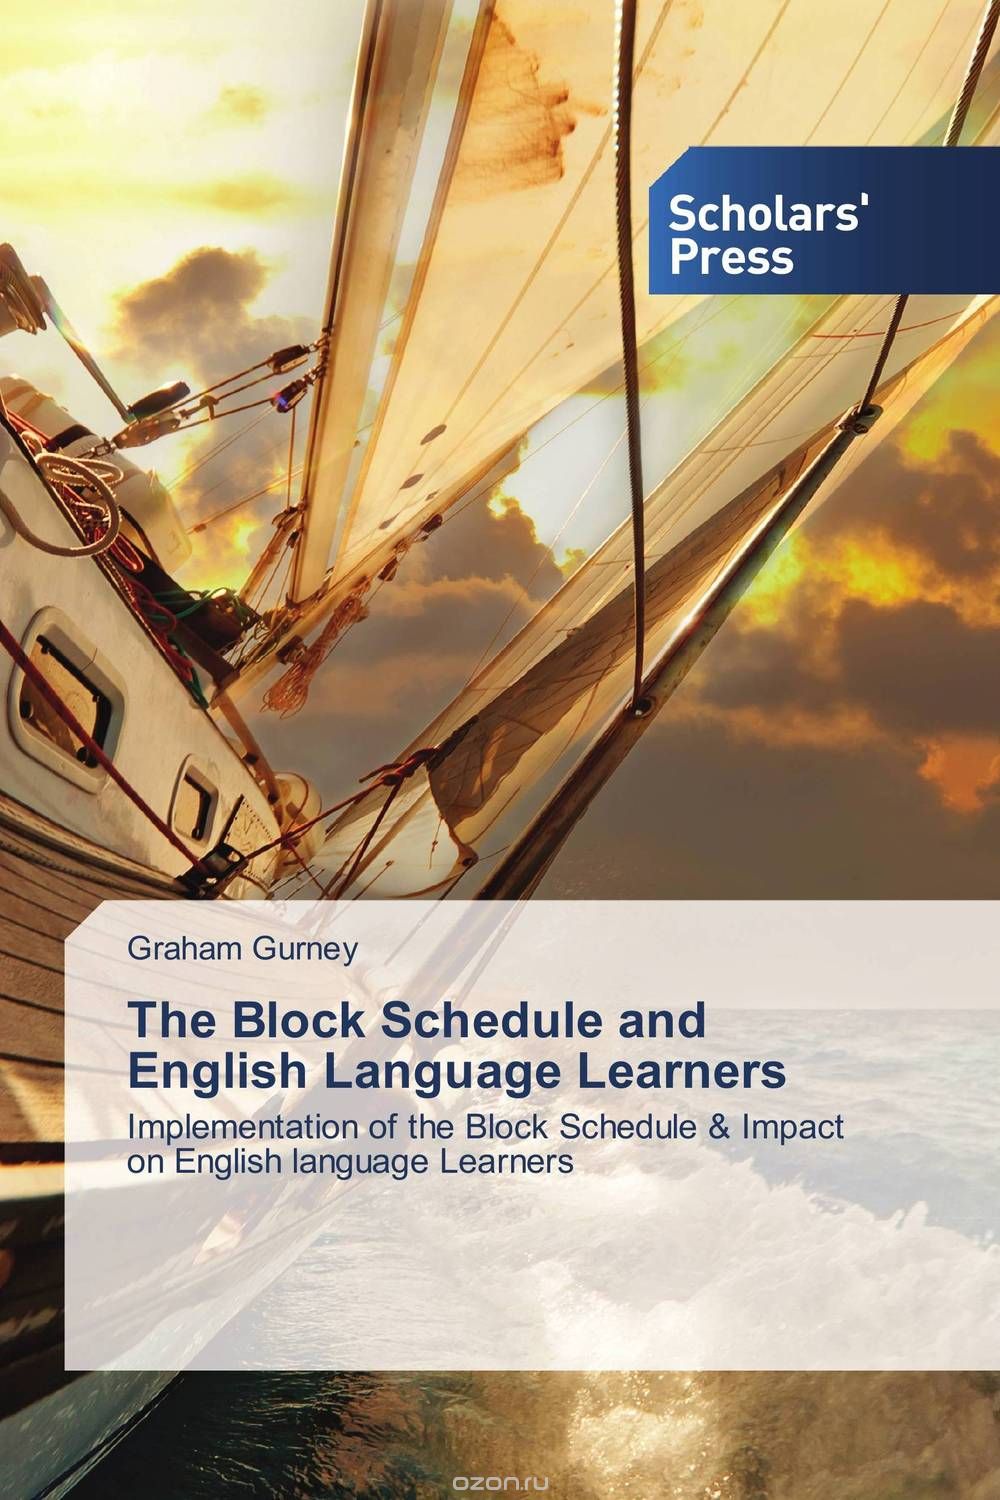 Скачать книгу "The Block Schedule and English Language Learners"